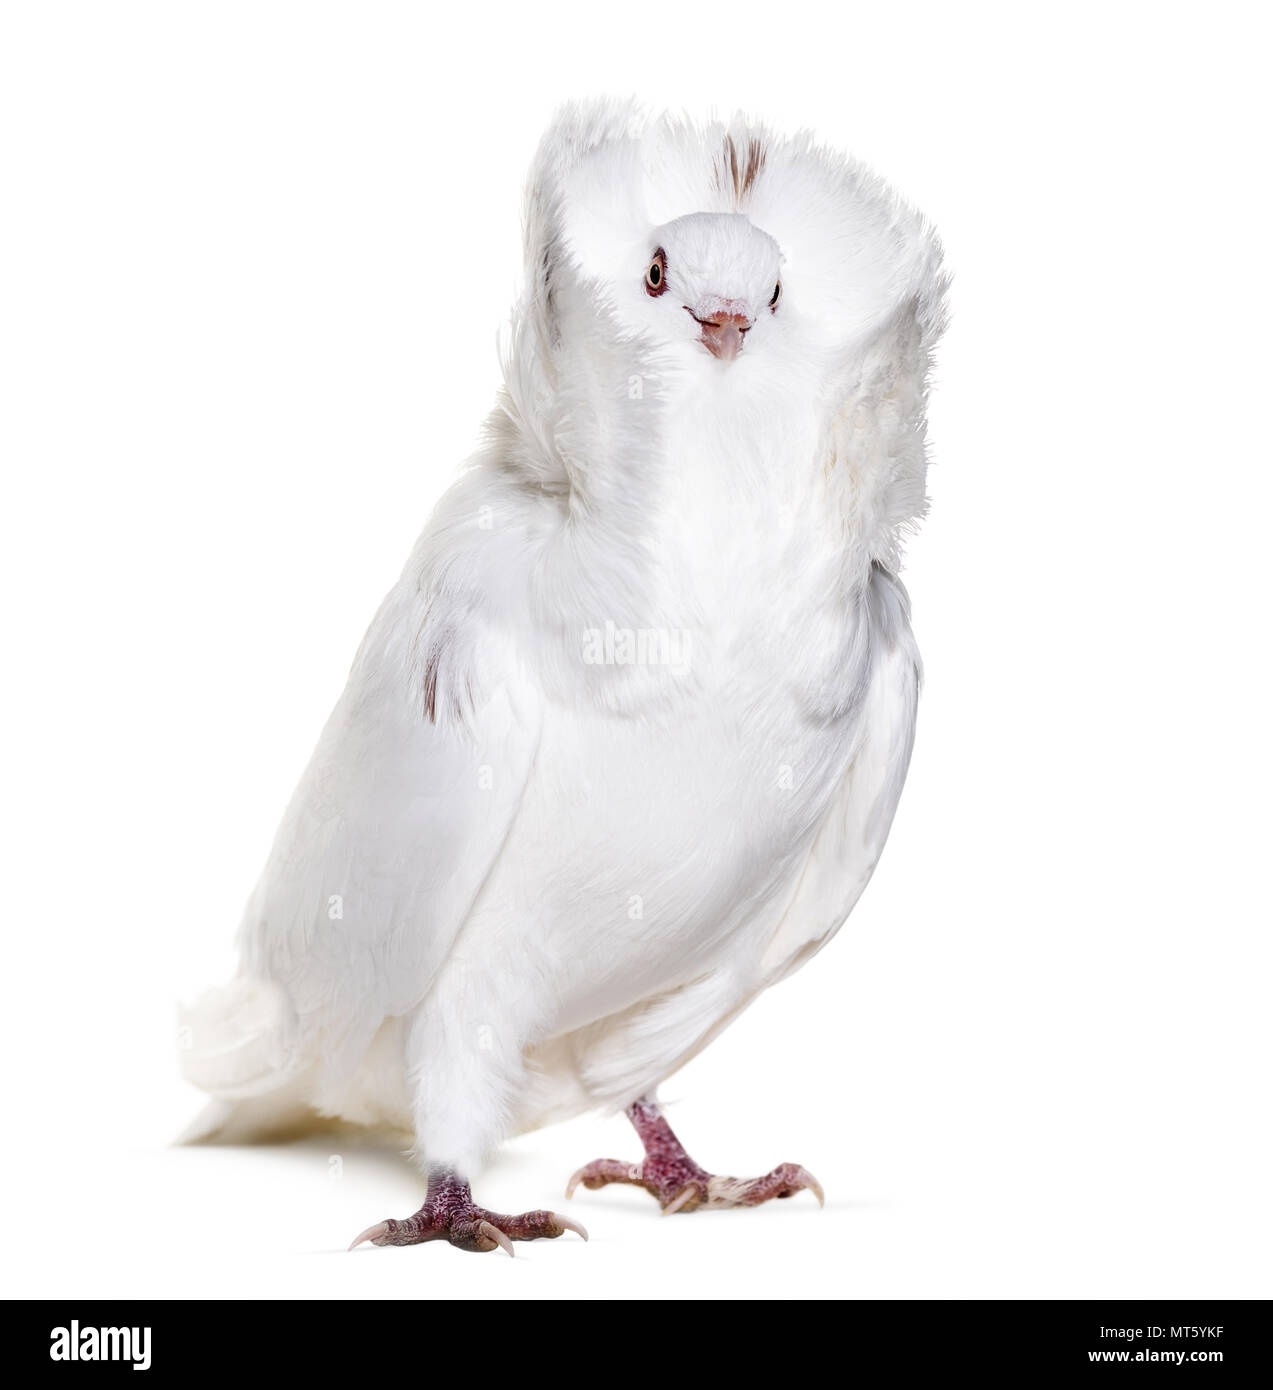 White Jacobin pigeon against white background Stock Photo